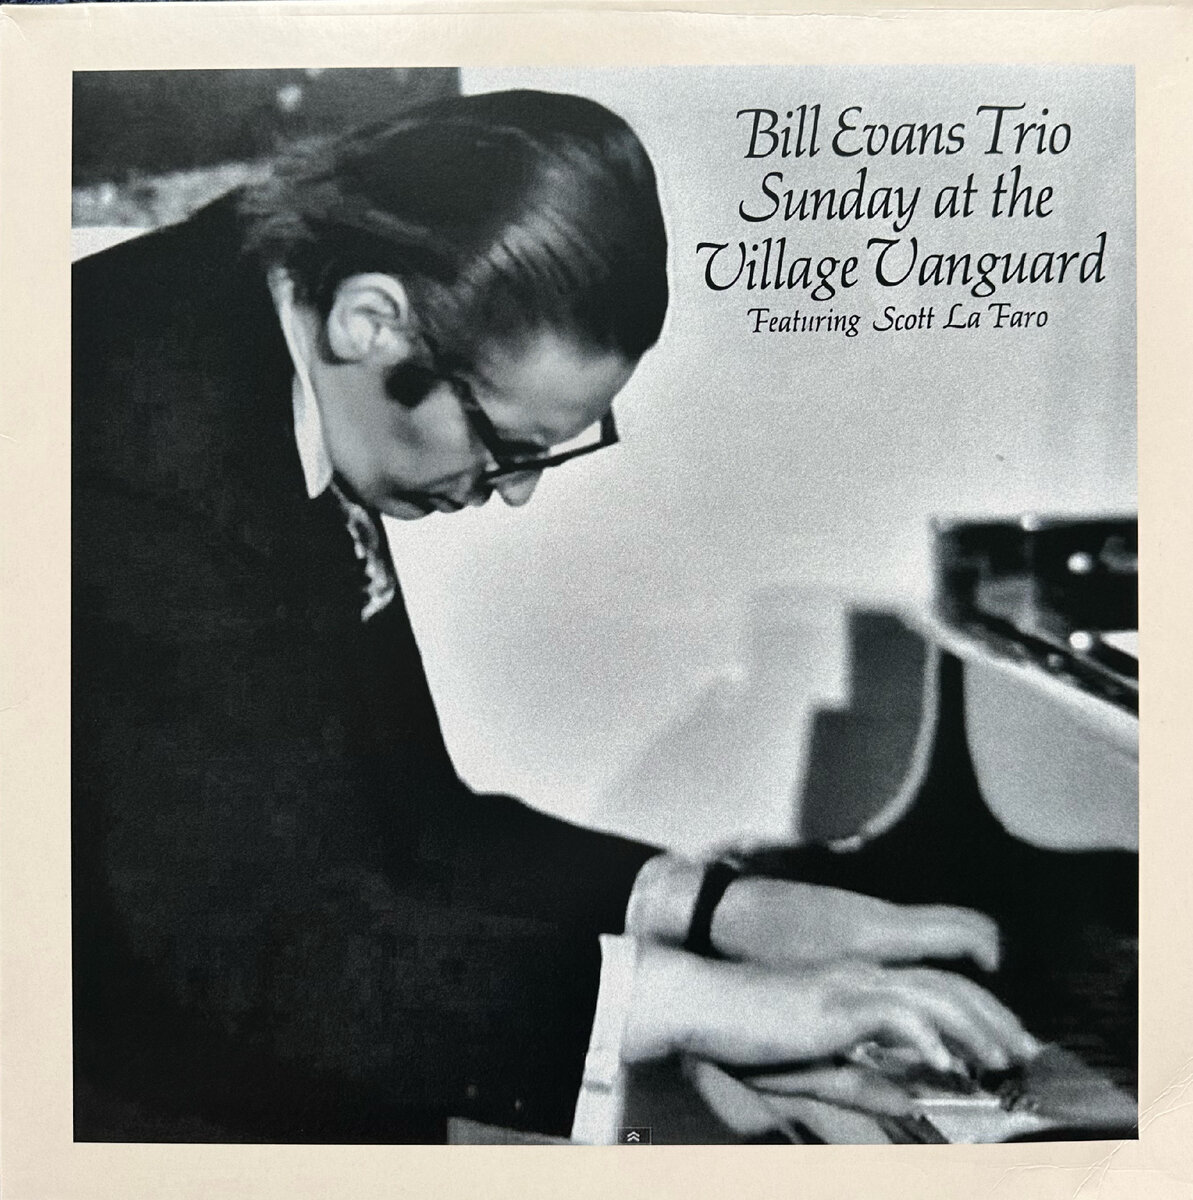 Bill Evans Trio – Sunday At The Village Vanguard